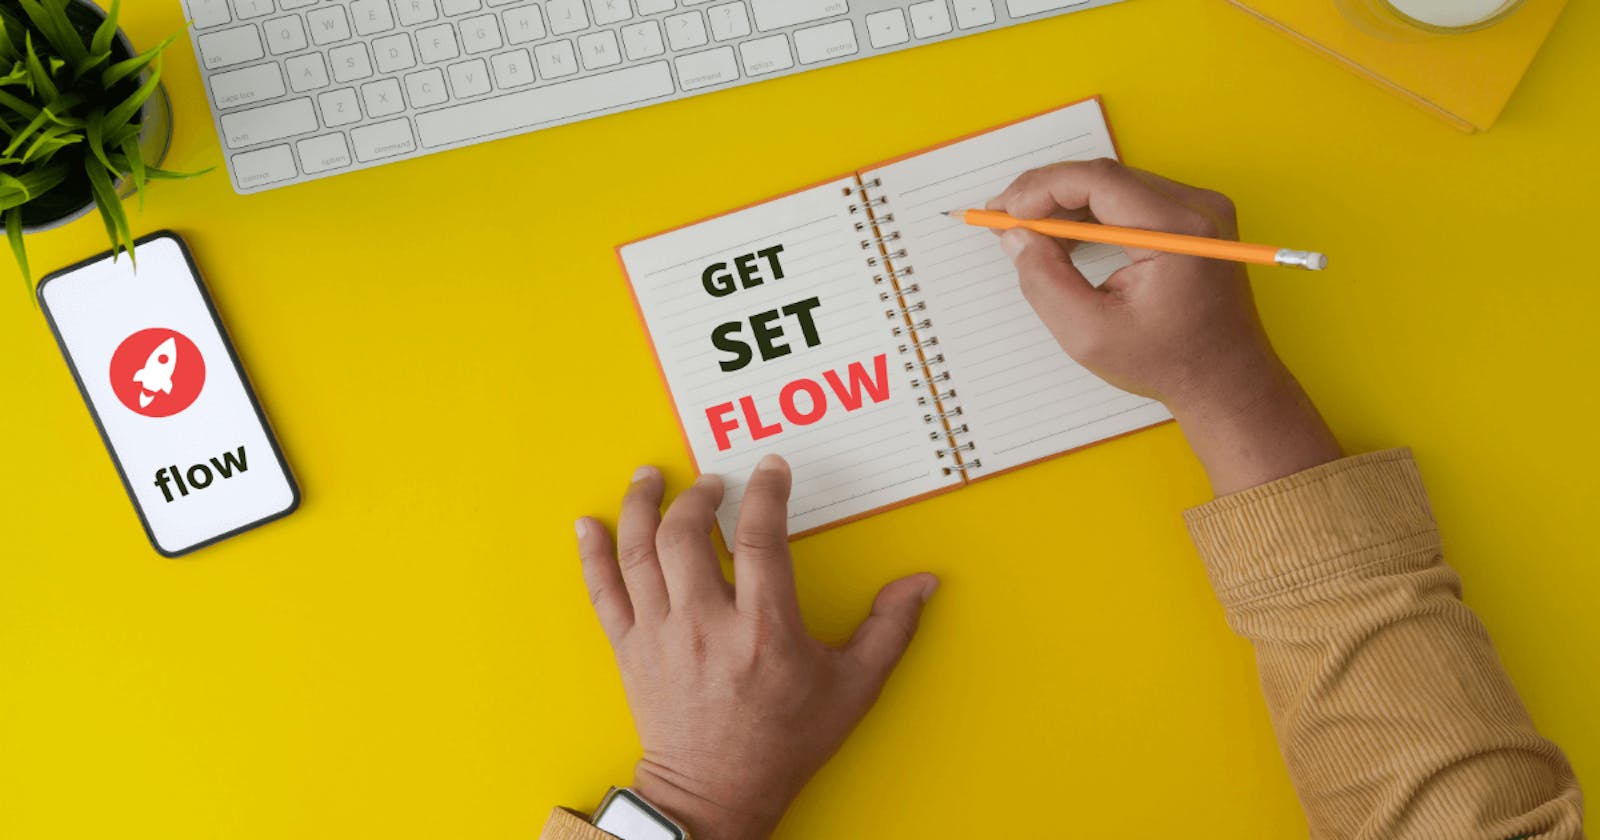 Introducing Flow - The Minimalist Productivity App